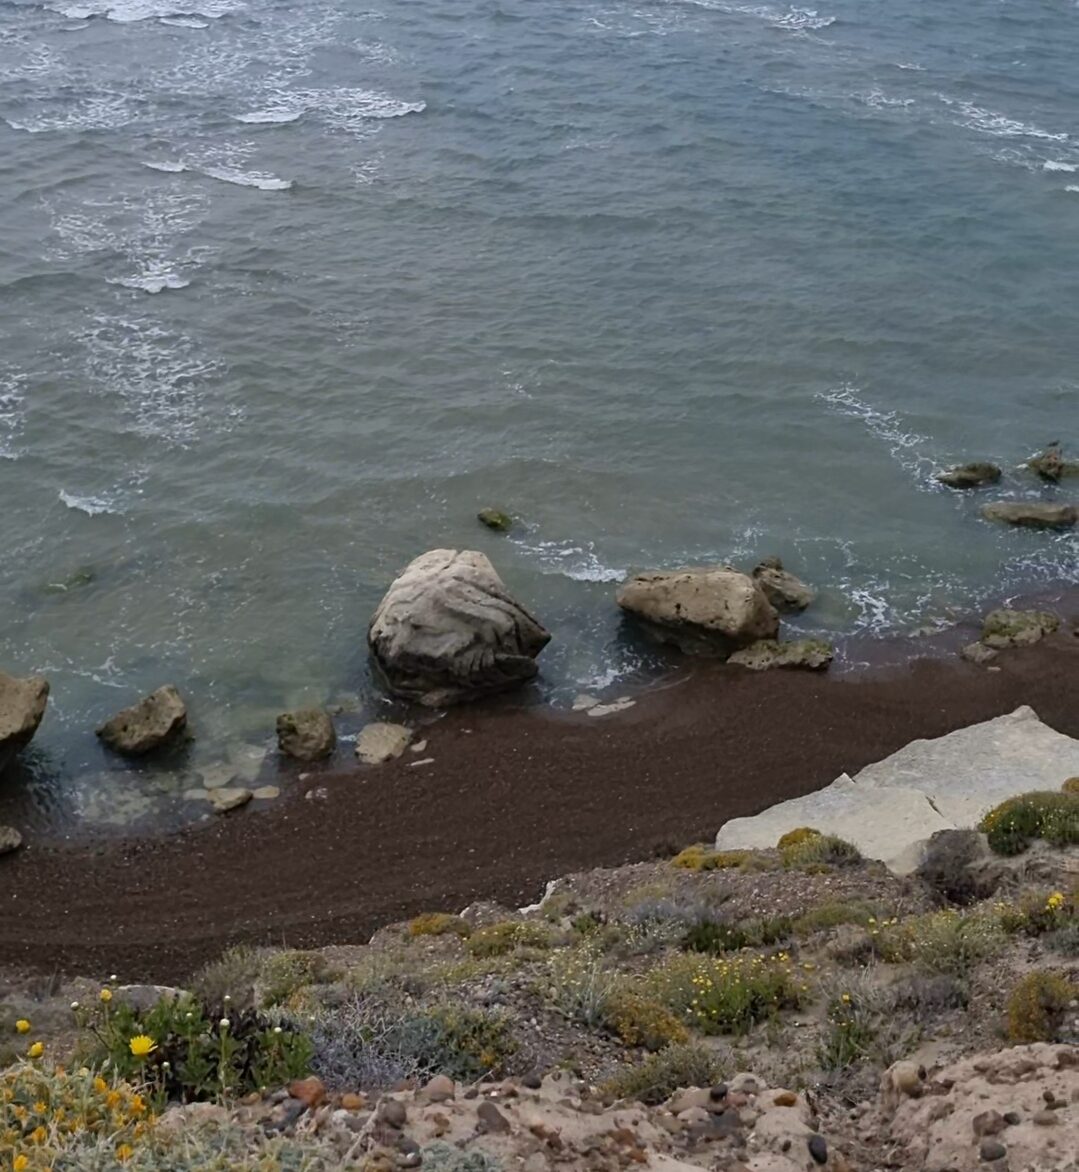 Piedras talladas en playa patagonica, chubut